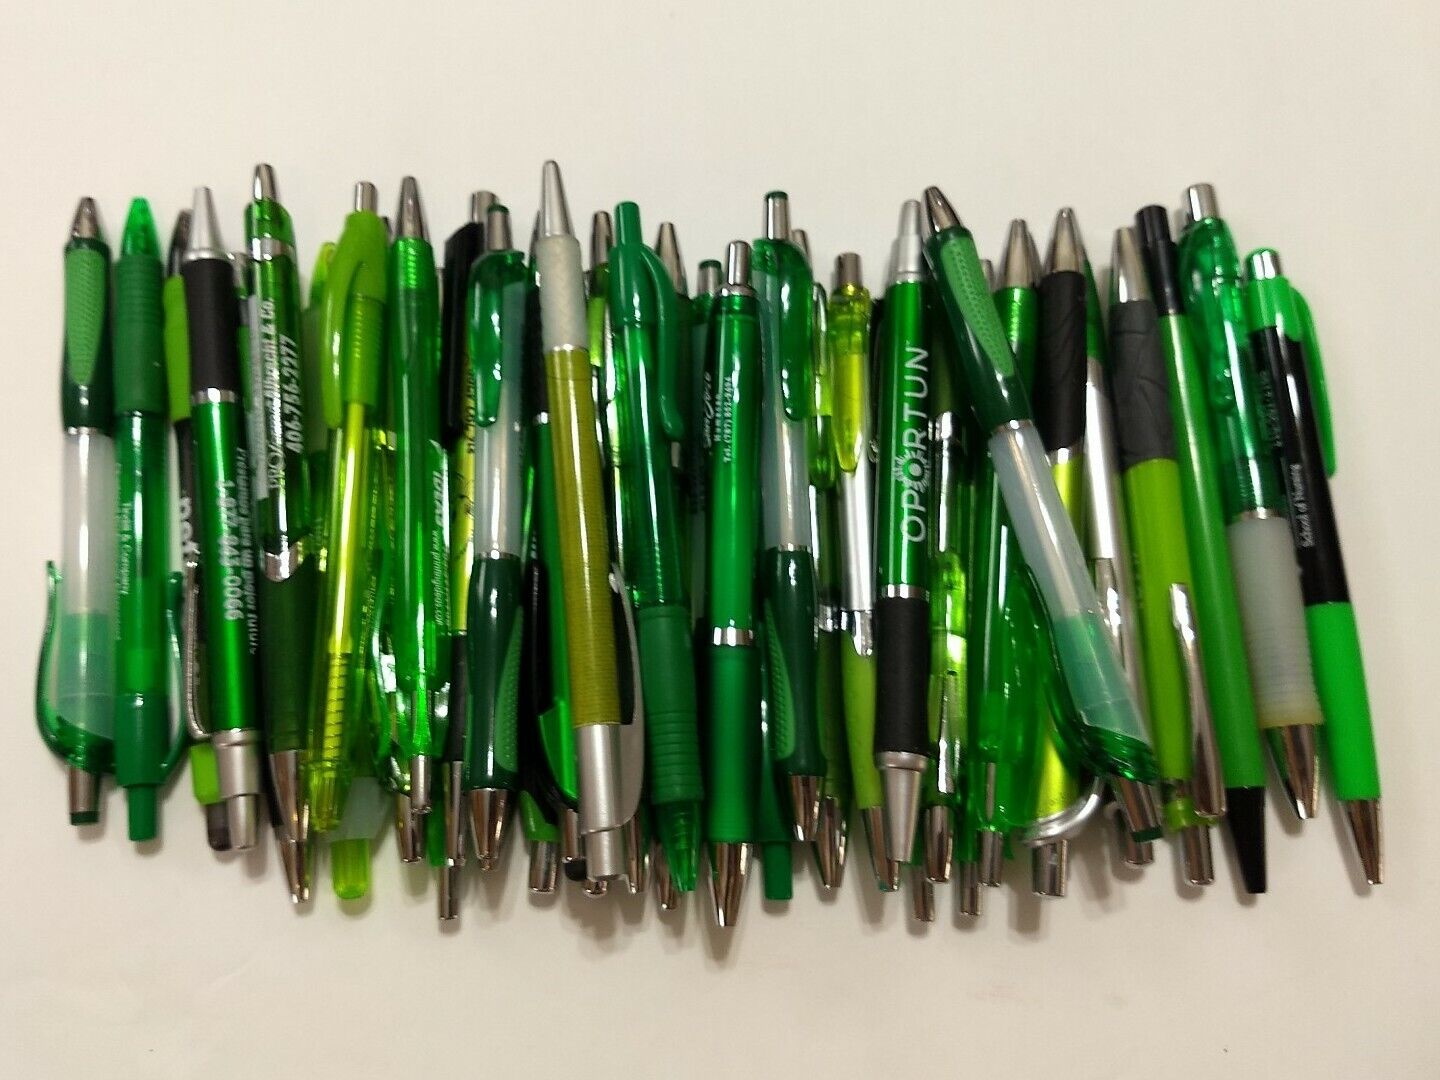 30ct Mixed Lot Misprint Retractable Click Pens:  FORREST / KELLY / GREEN Misprint Does Not Apply